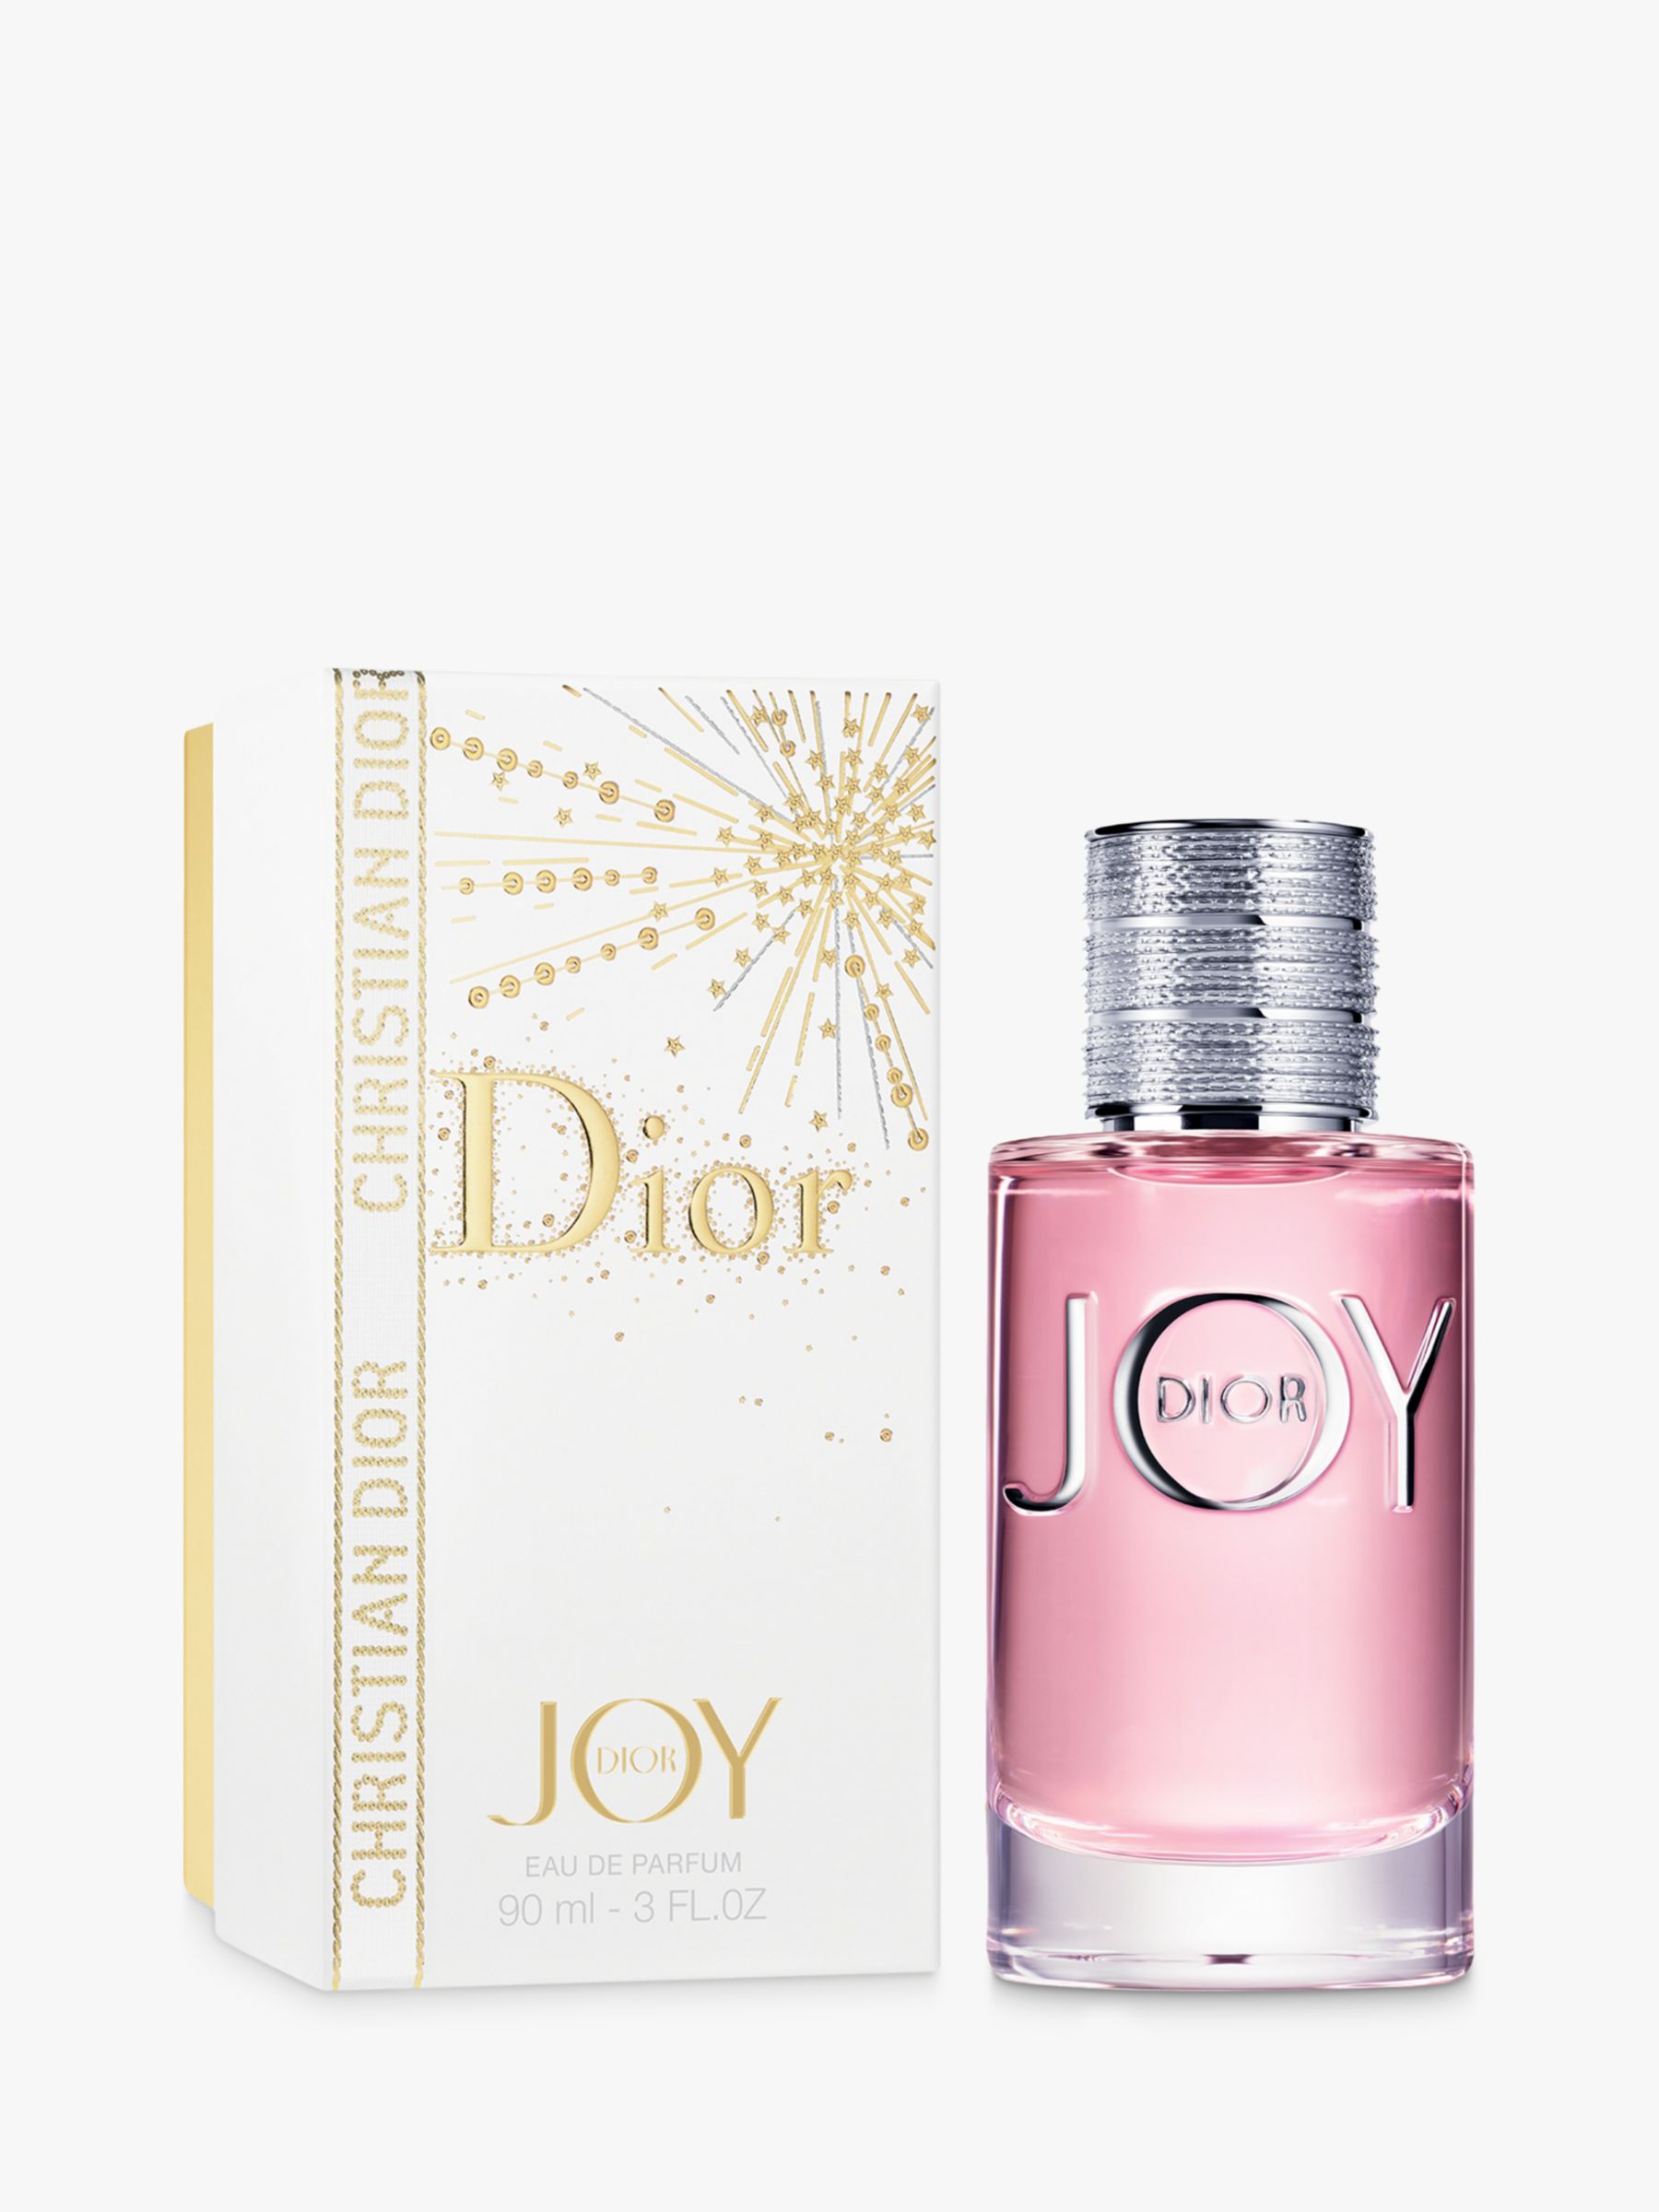 dior joy 90ml price